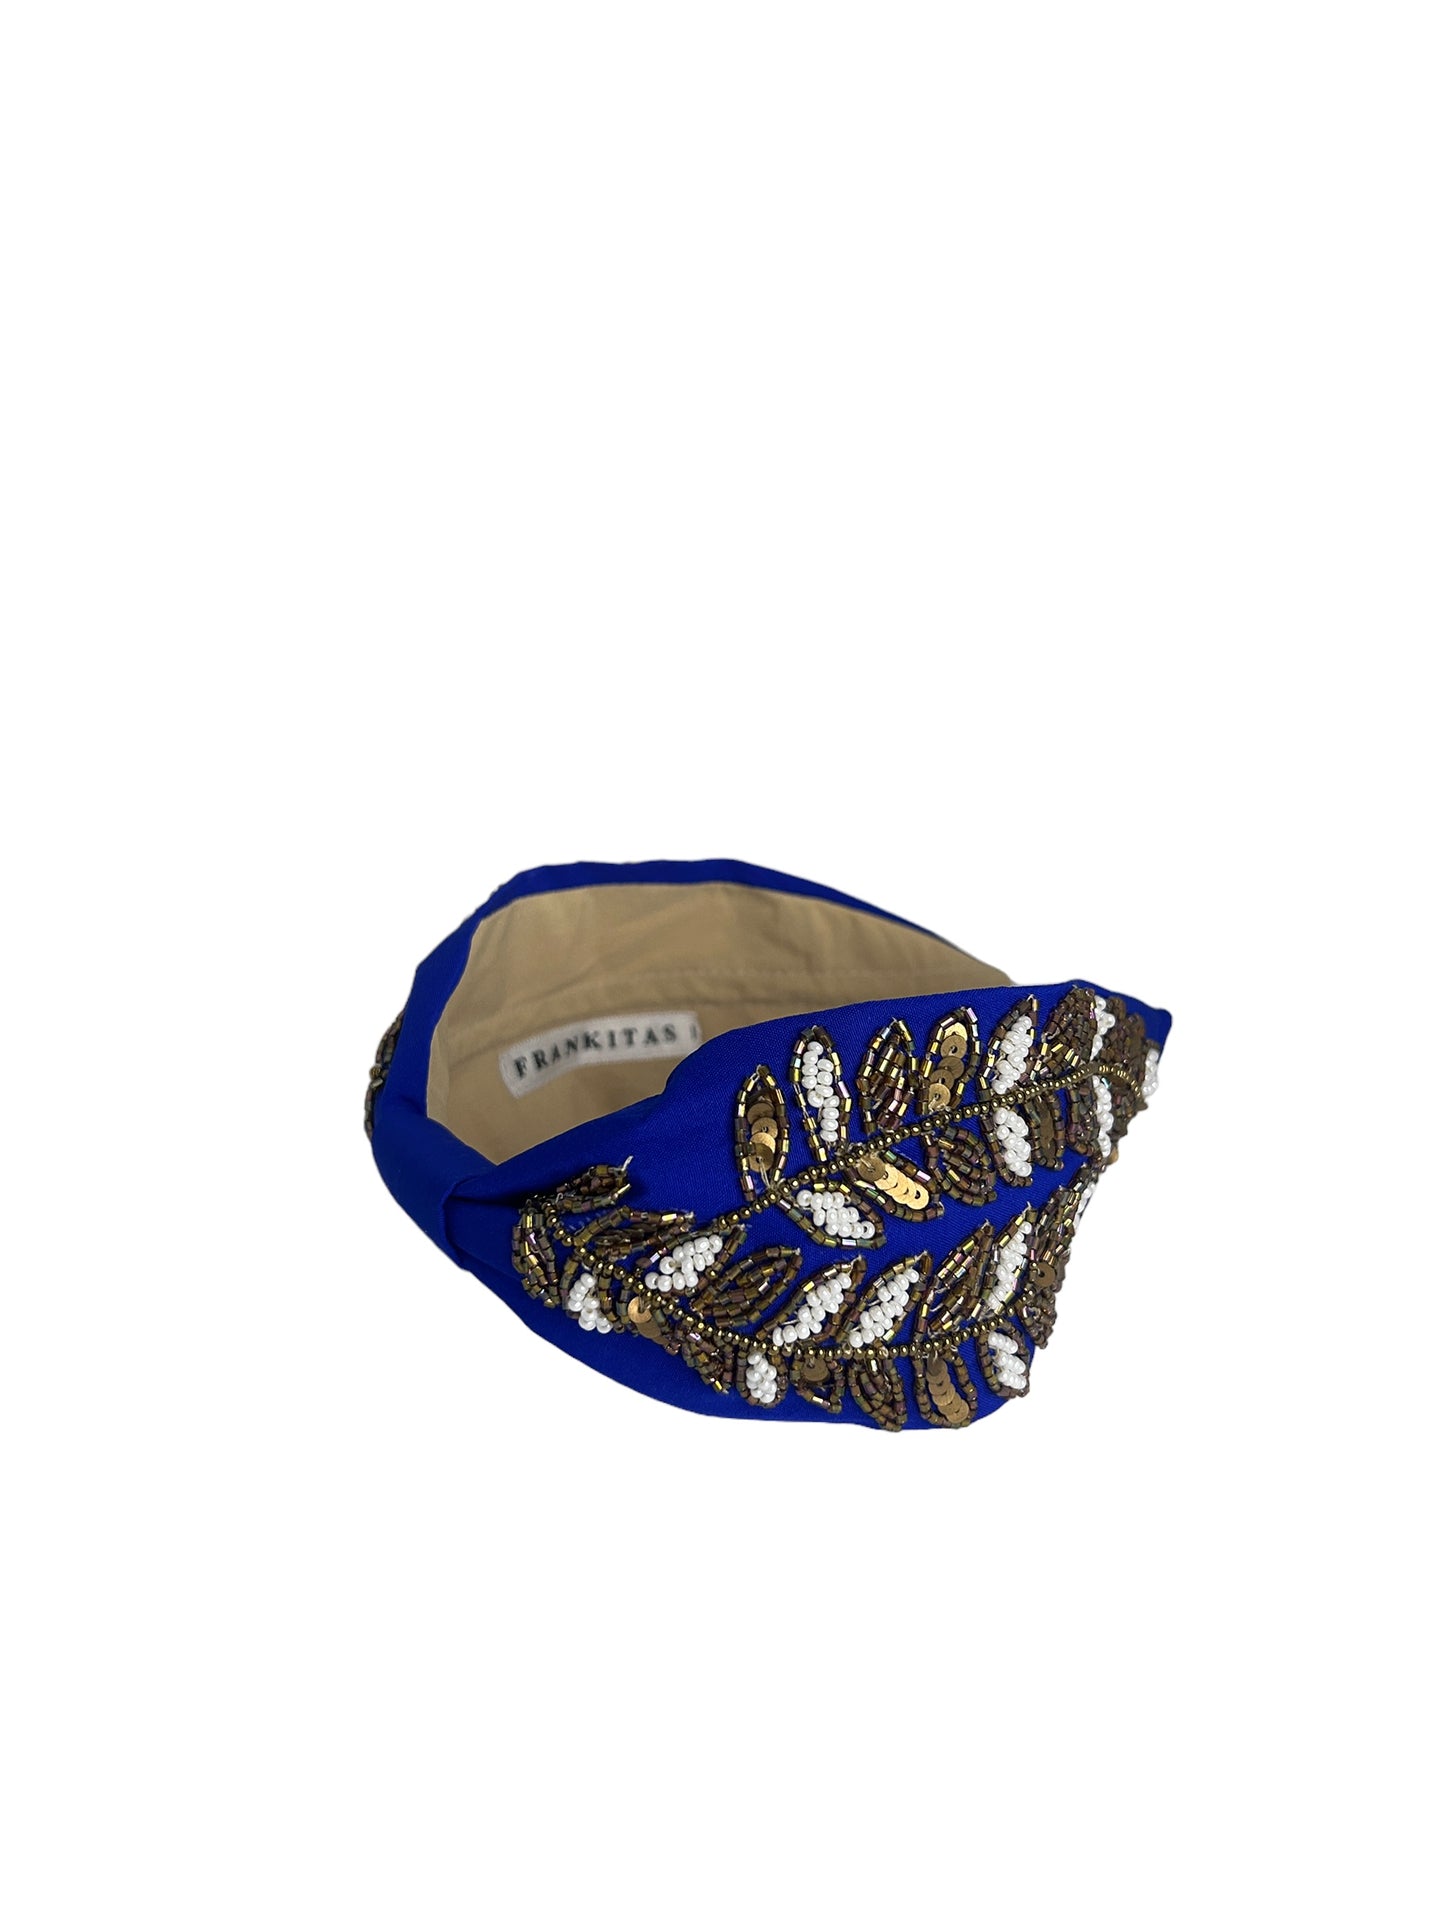 Headbands - Bright Blue Gold Leaves